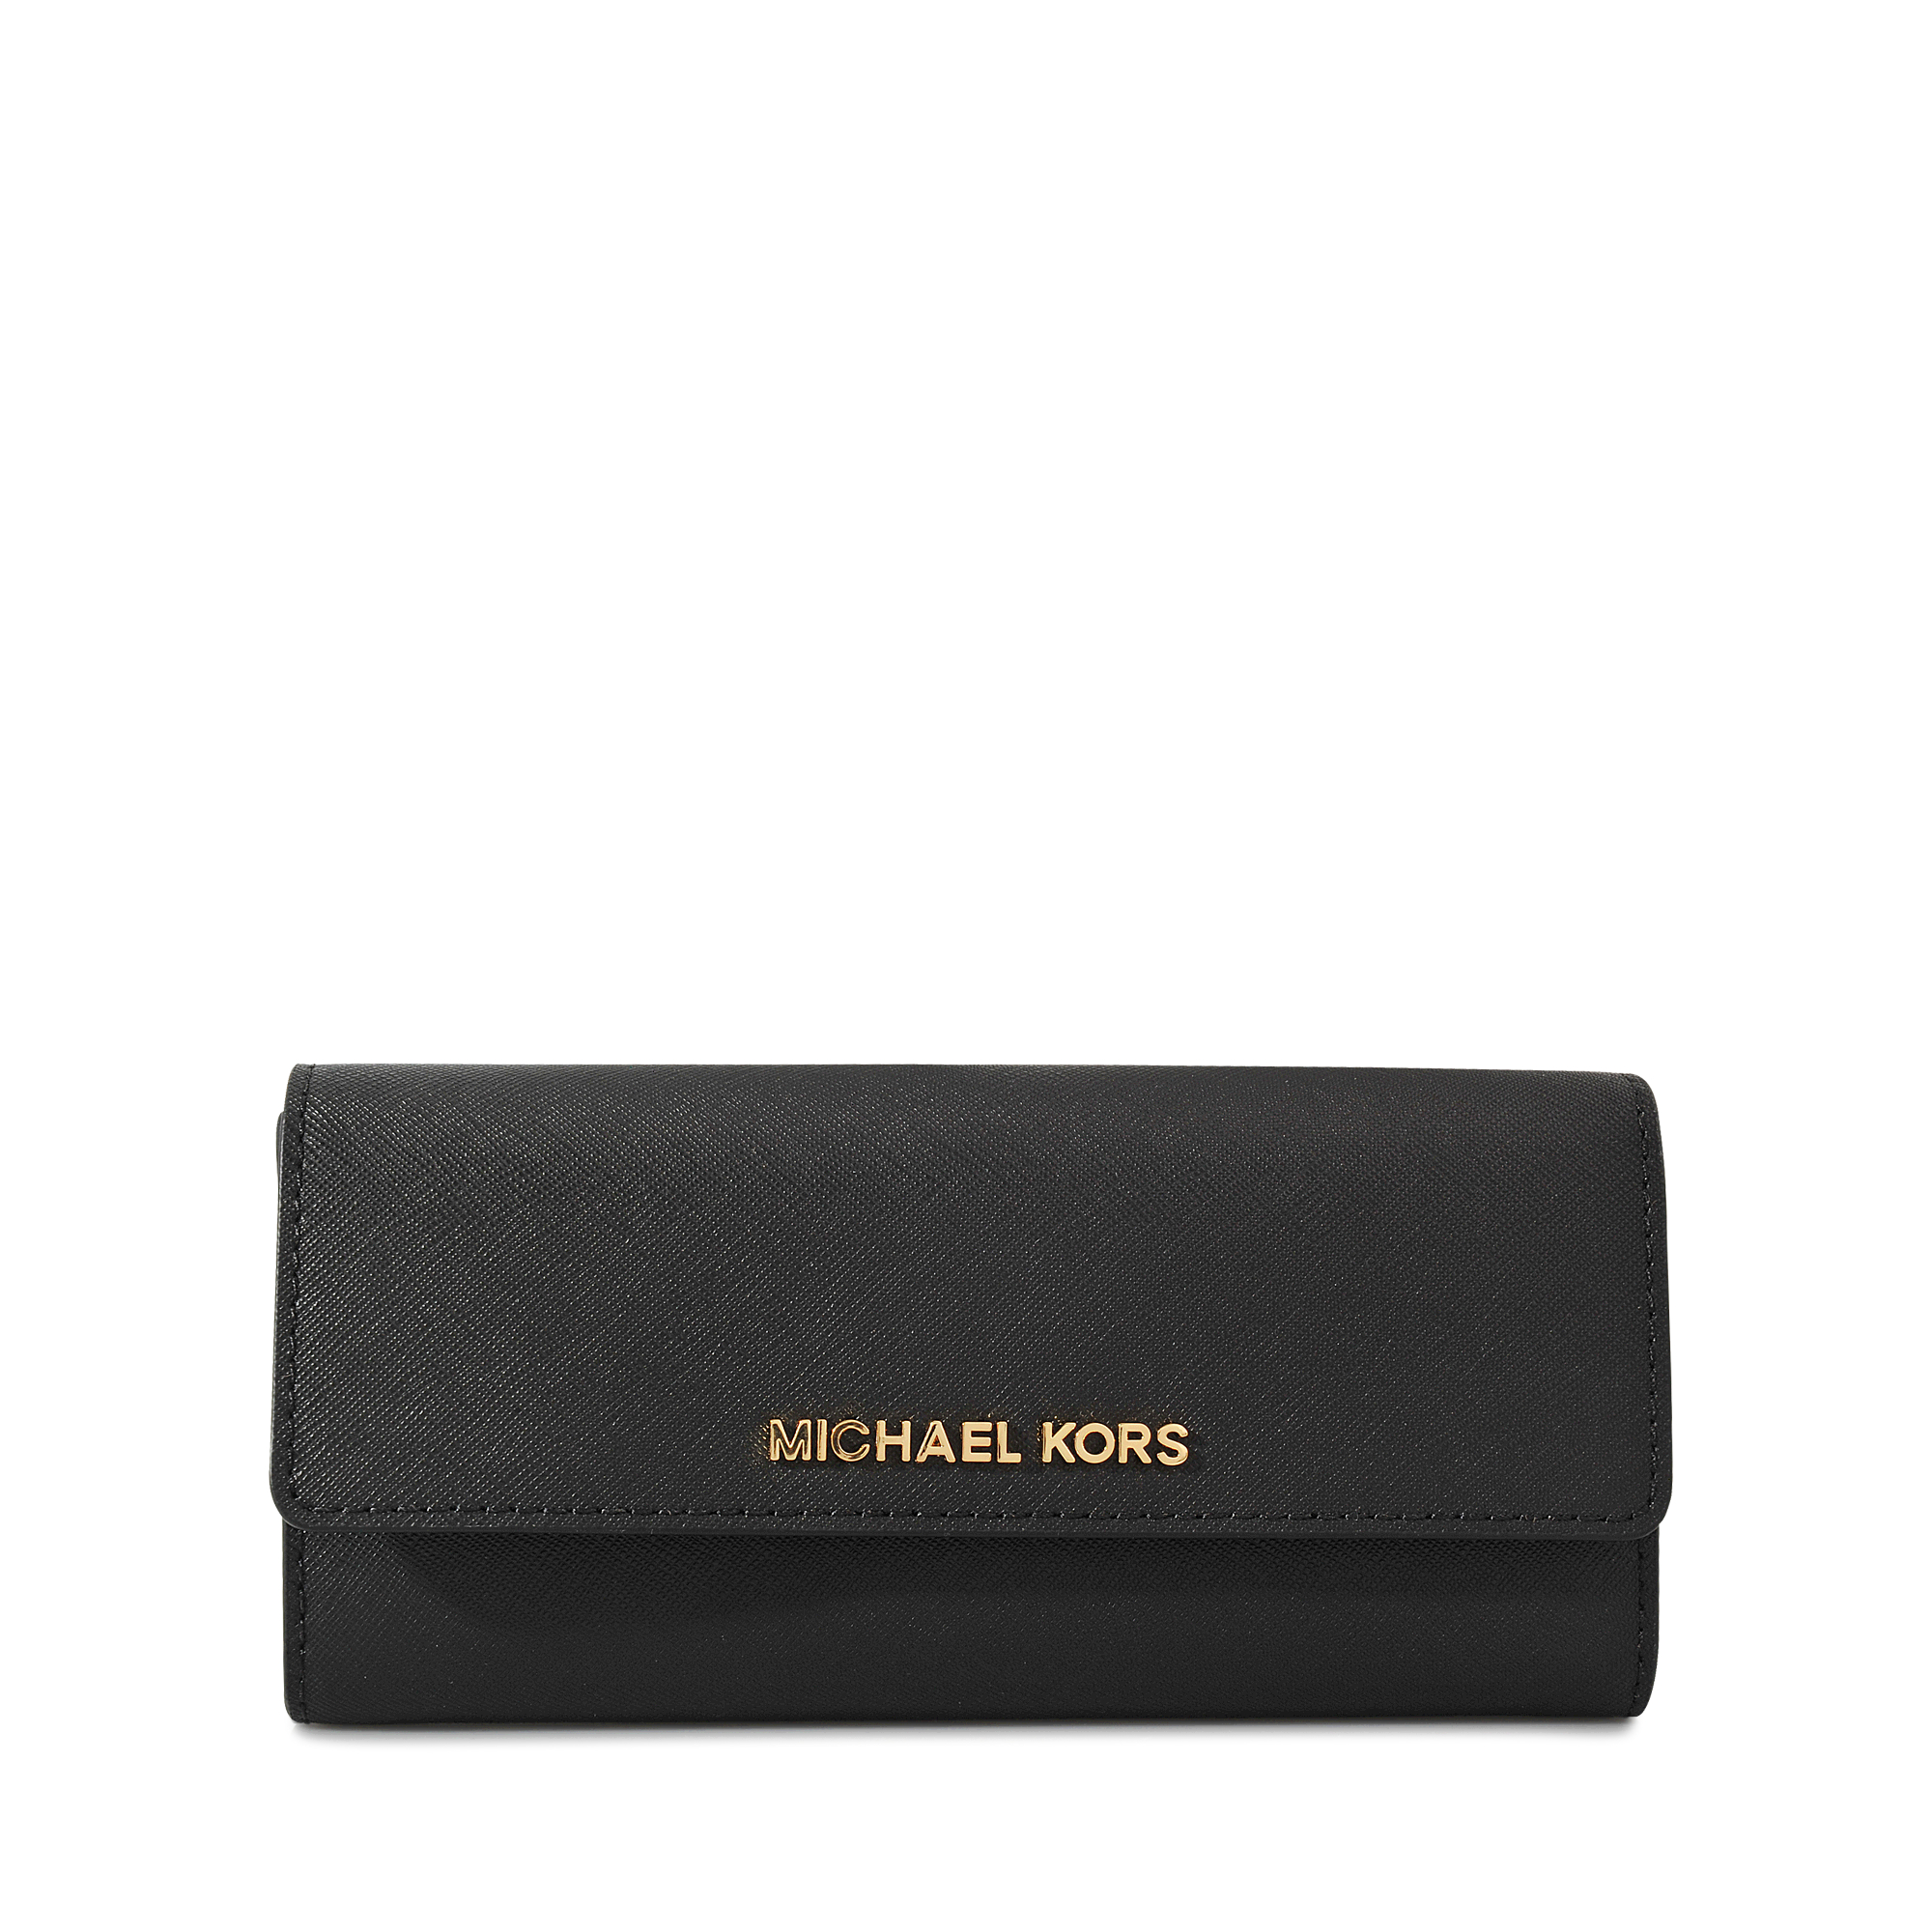 Michael Kors Jet Set Travel Lg Flap Carryall Wallet in Black | Lyst